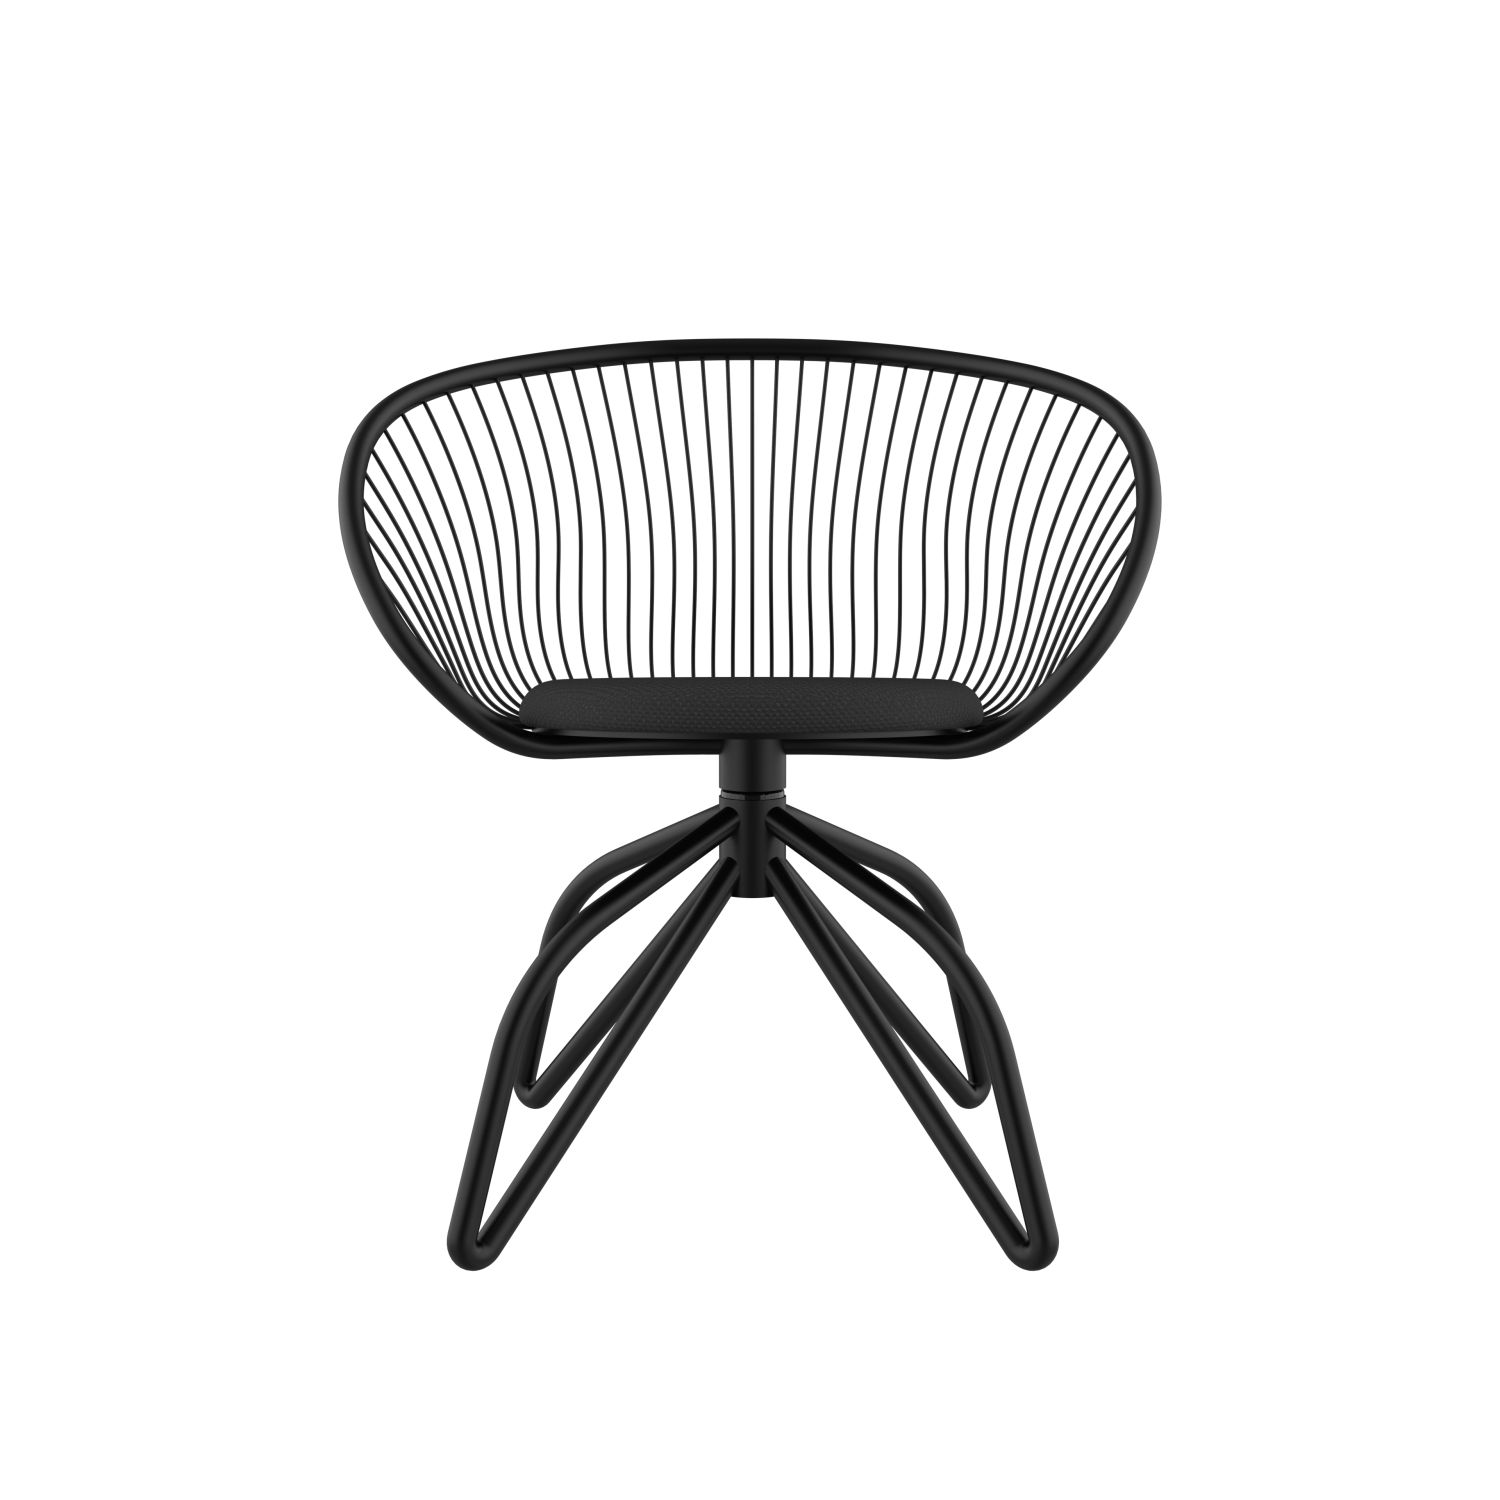 lensvelt powerhouse company coquille chair havana black 090 black ral9005 hard leg ends